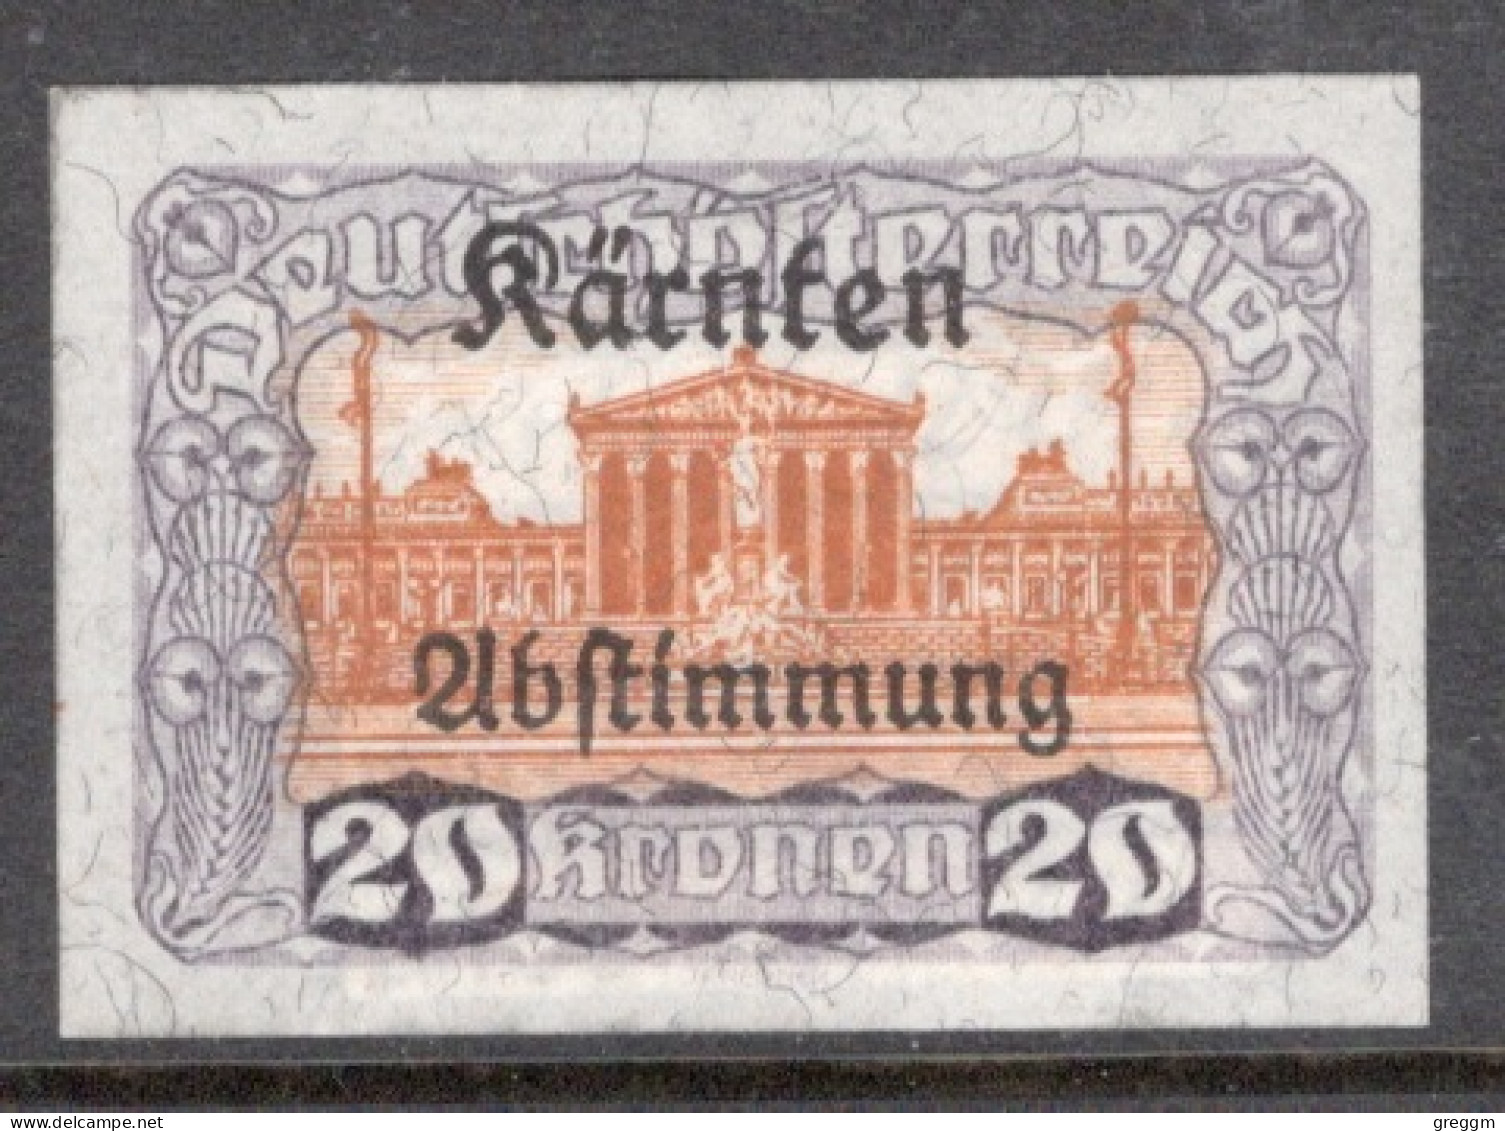 Austria 1920 Single Stamp Showing Overprinted "Kärnten Abstimmung" - Referendum In Carinthia In Unmounted Mint - Neufs